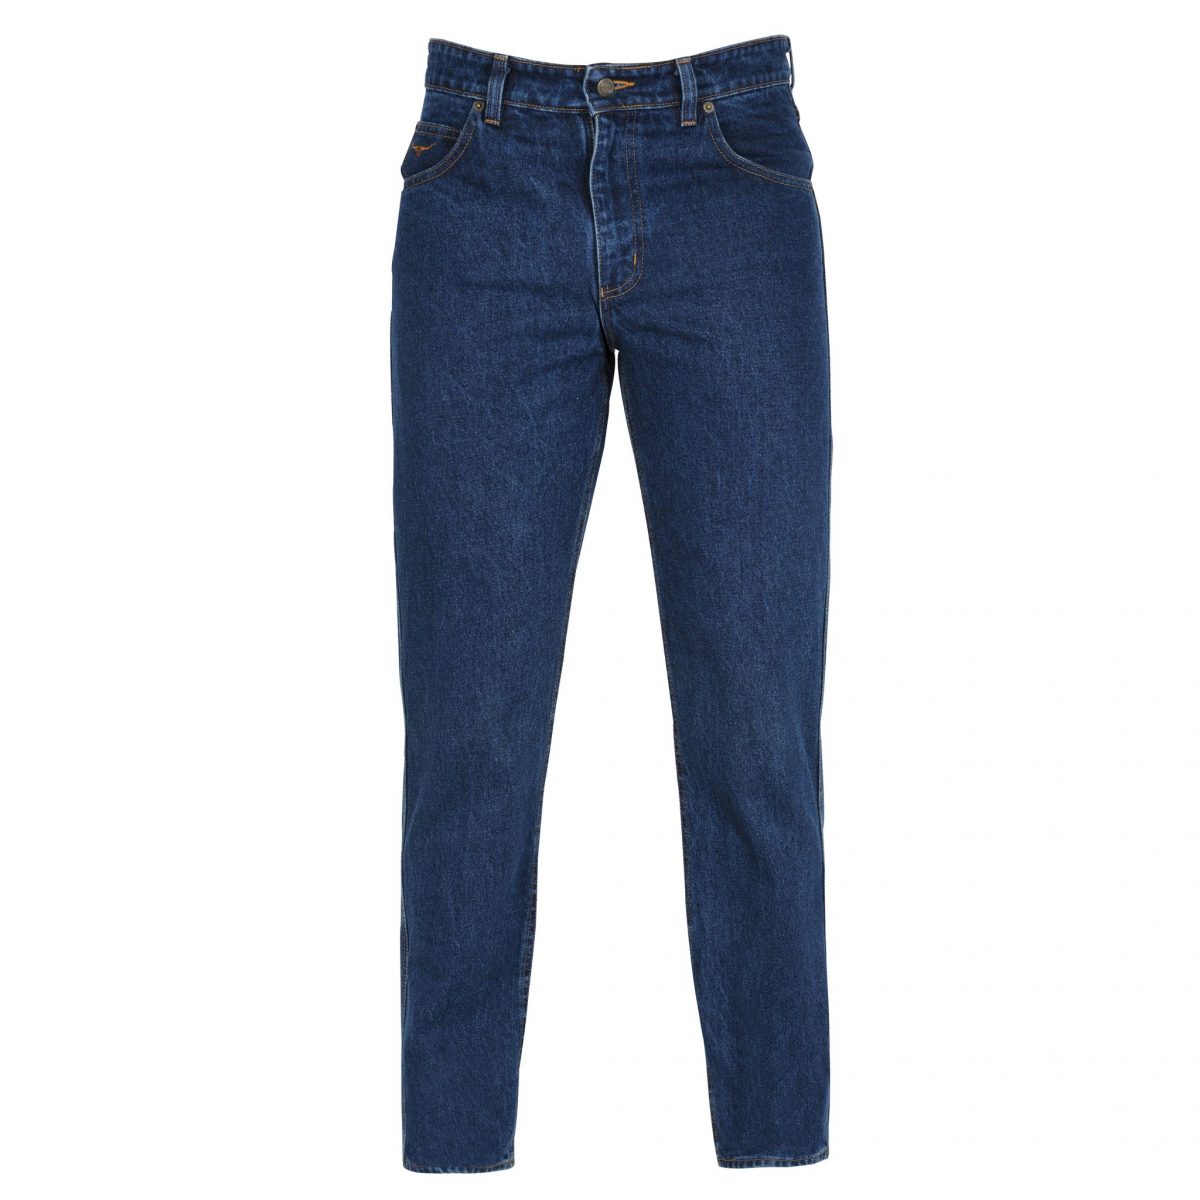 RM Williams Linesman Jeans, slim fit, low rise - Wallers Mildura